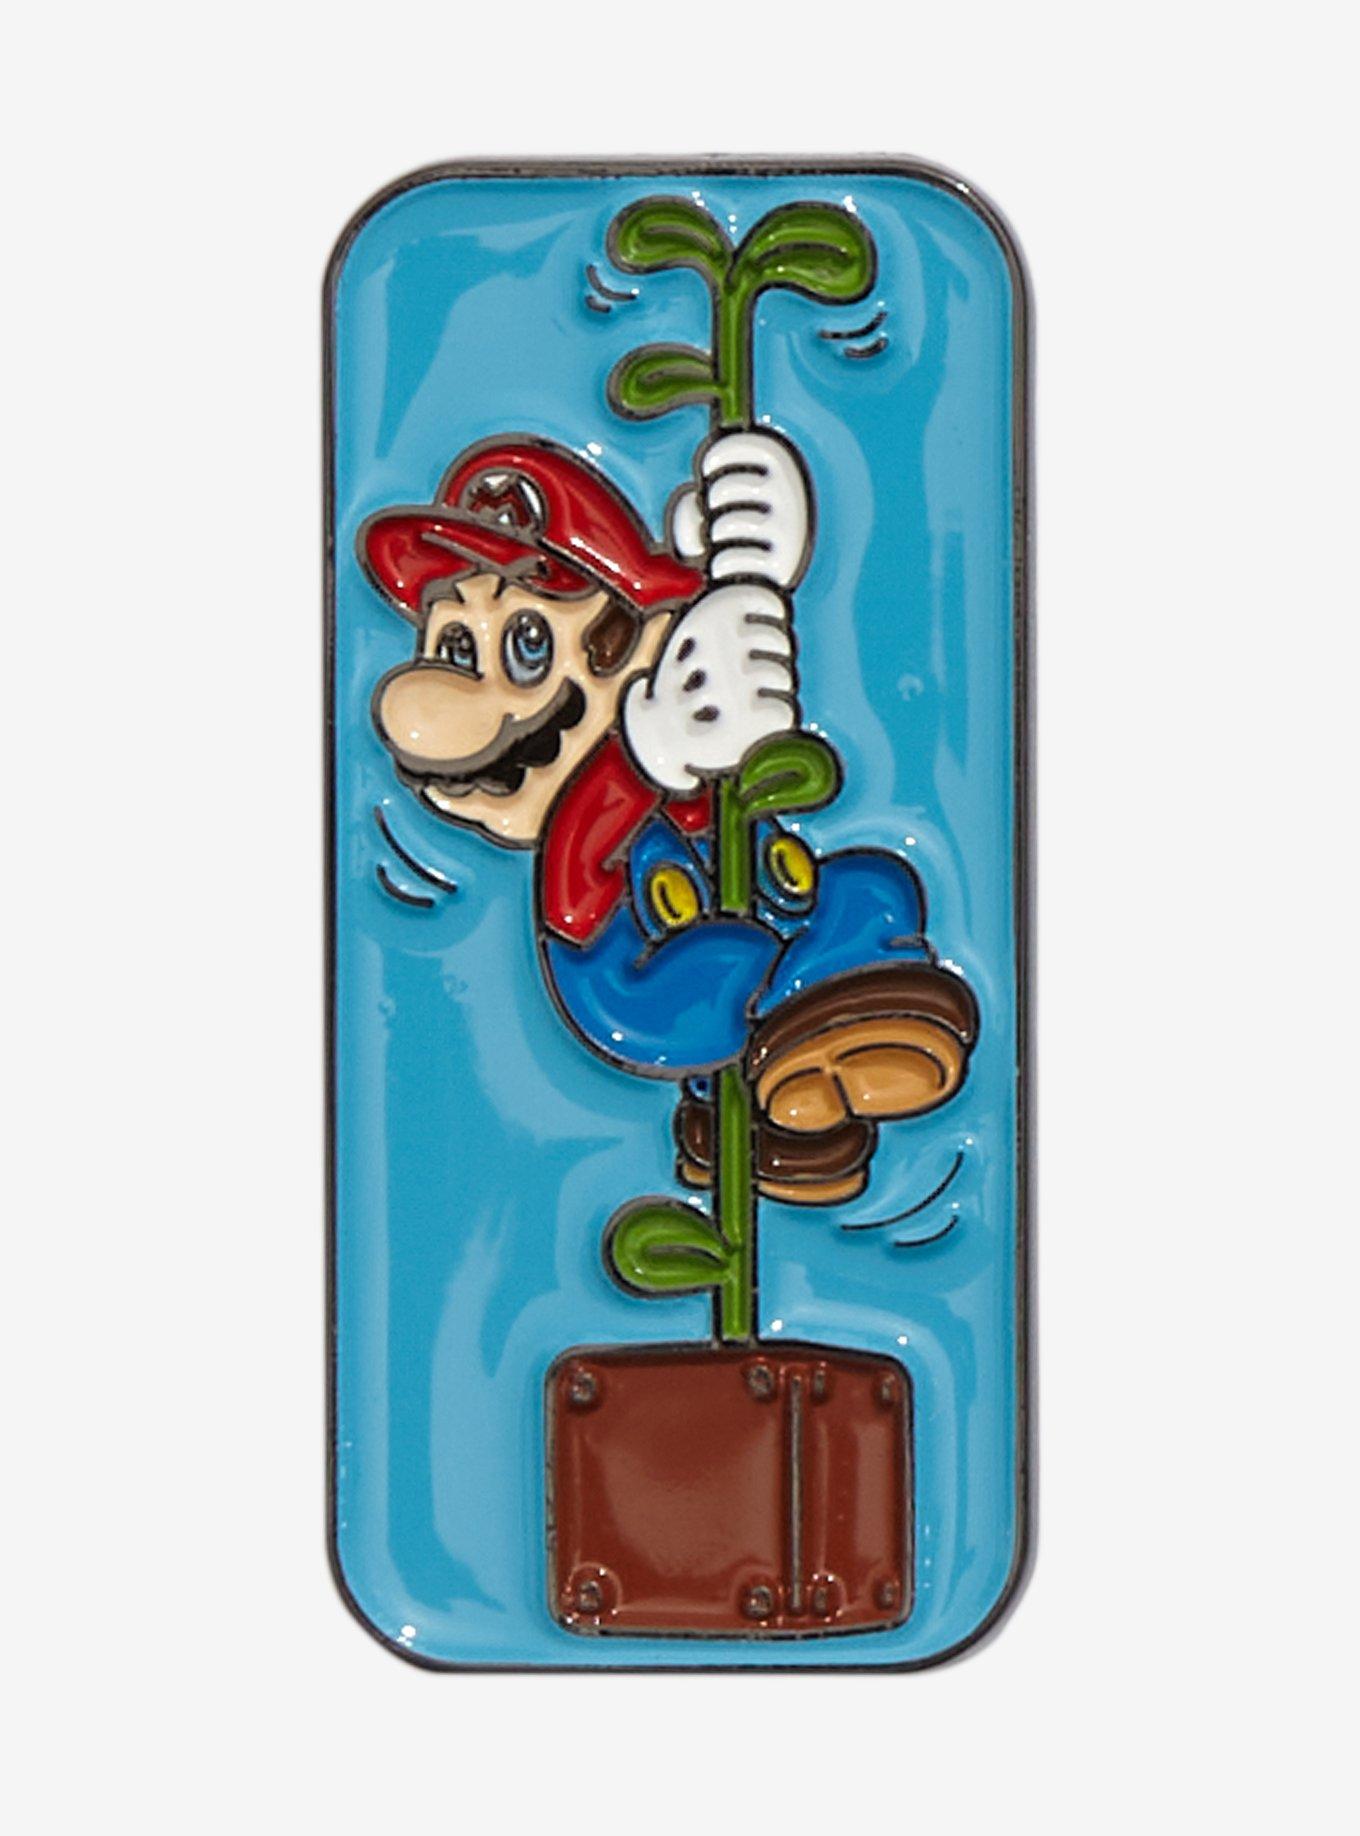 Pin en Mario characters